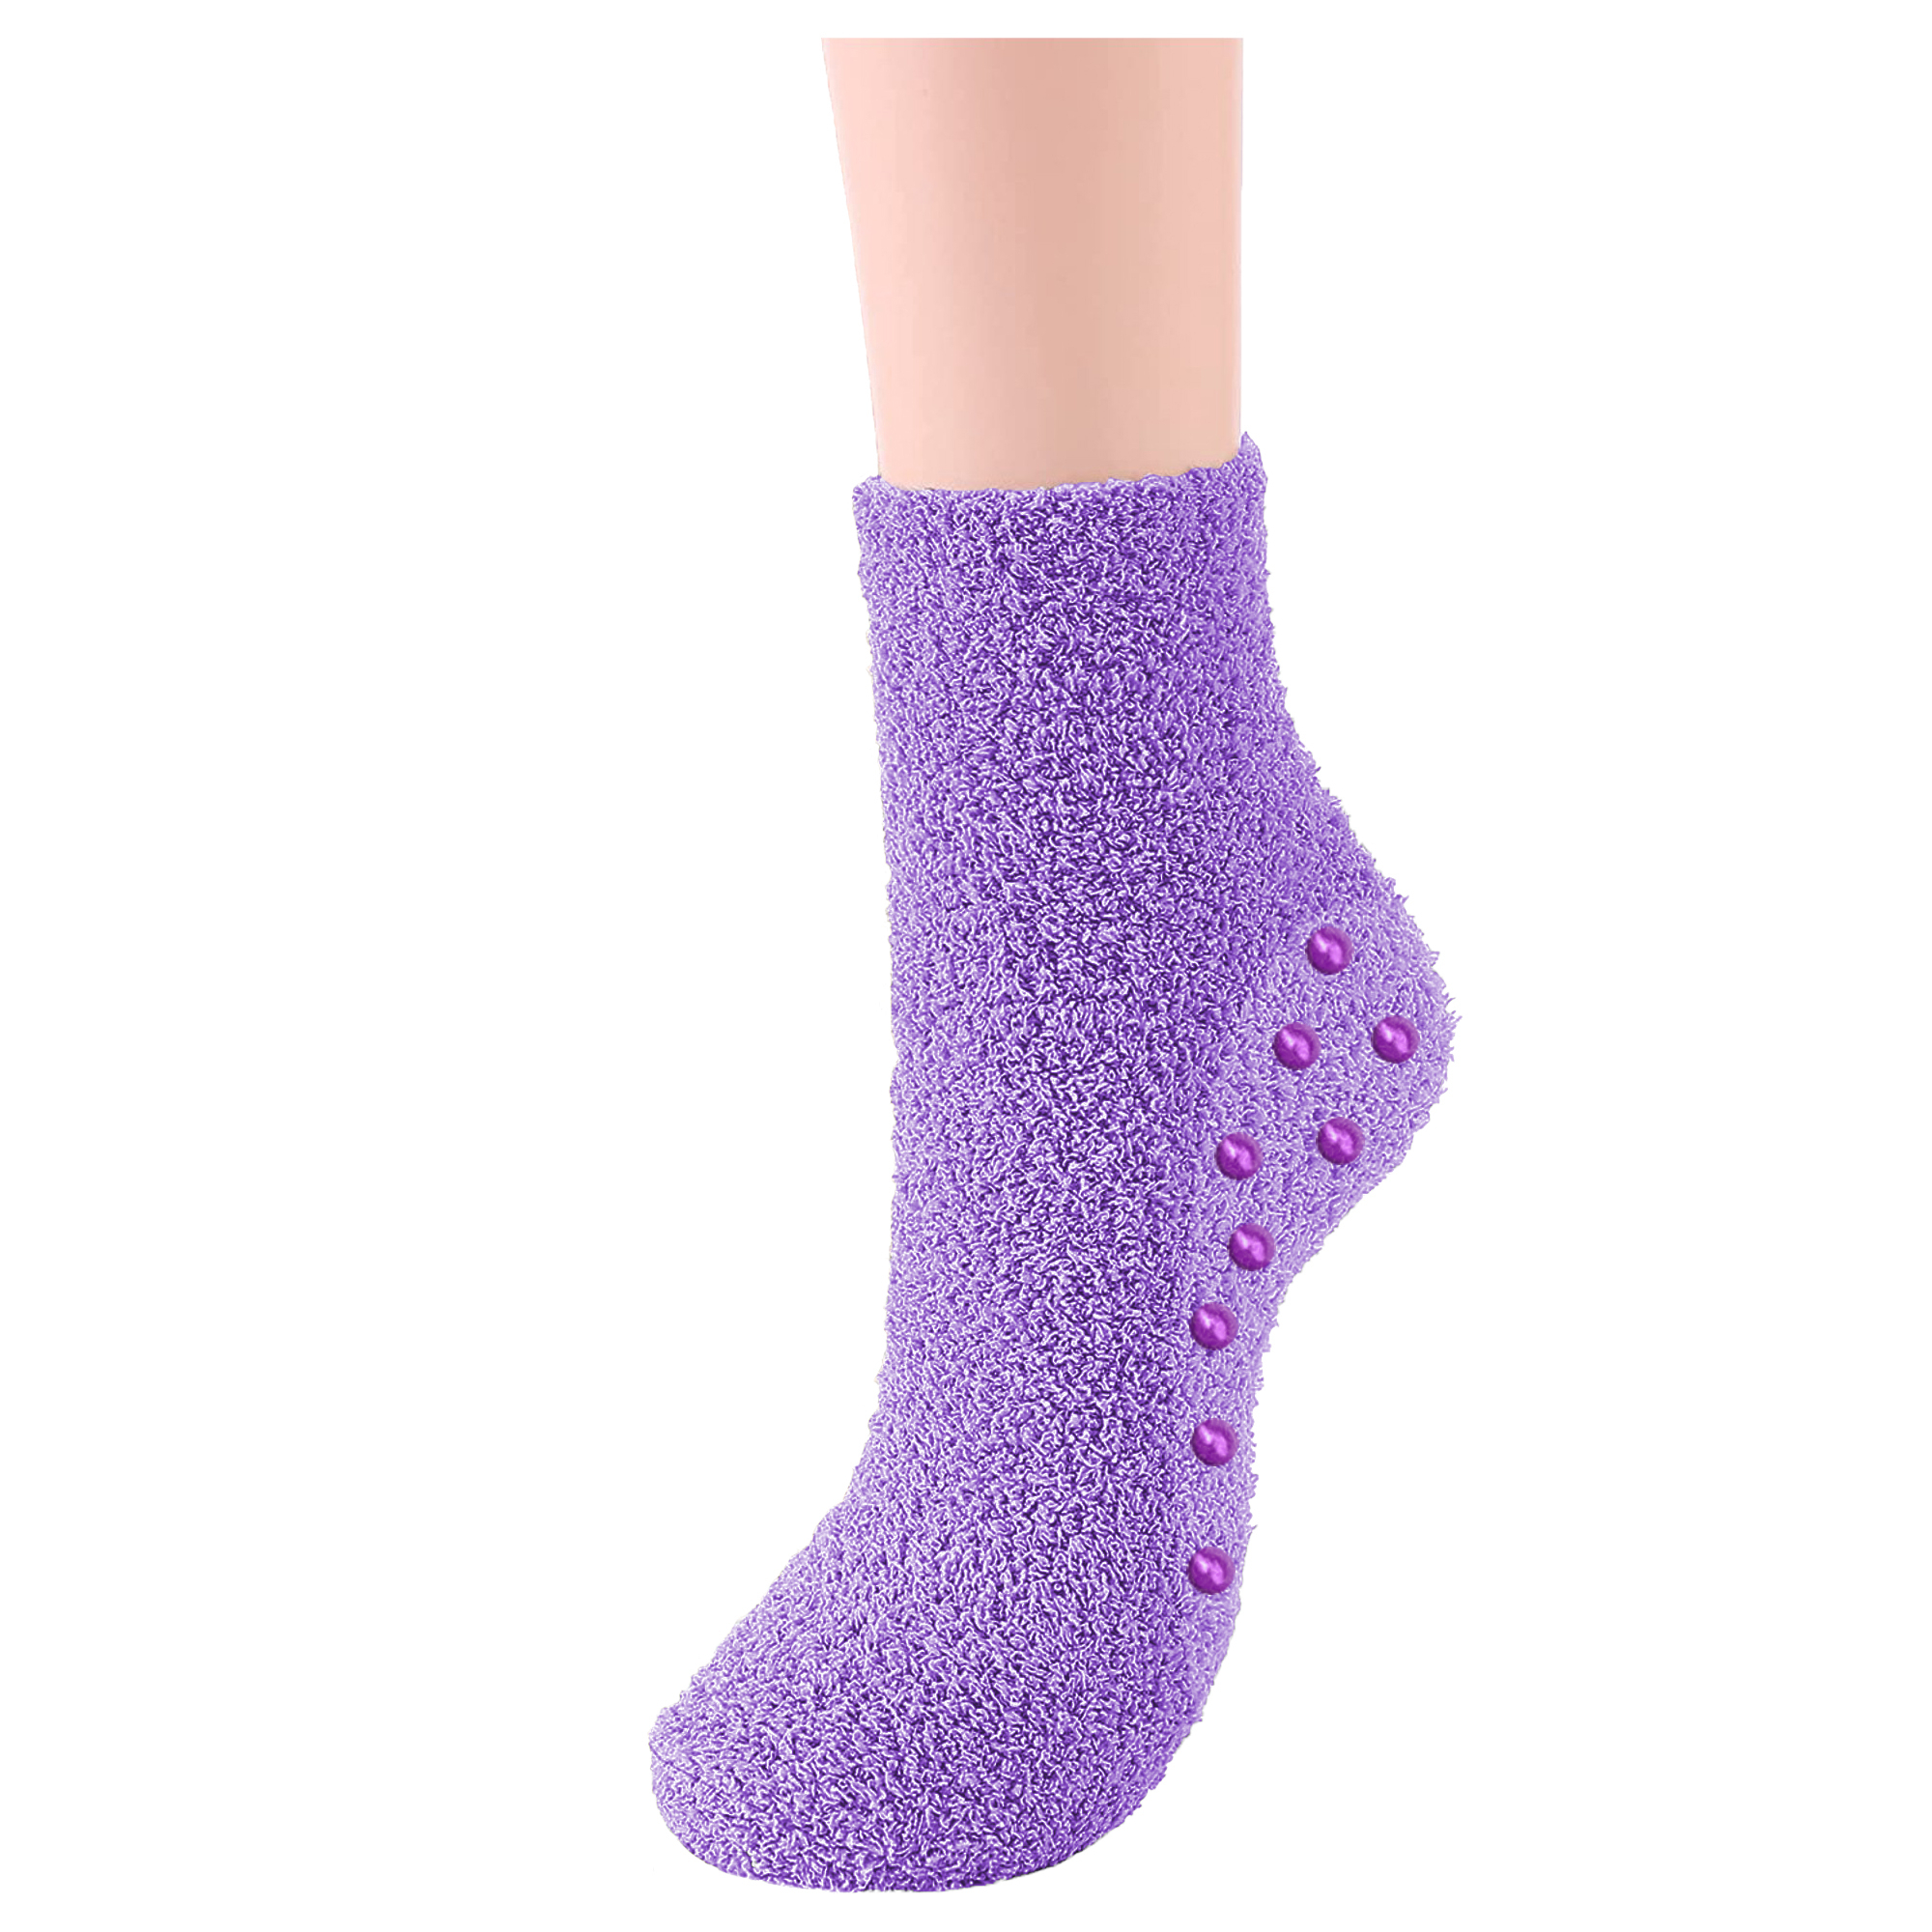 4-Pairs: Women's Non-Slip Warm Soft Fluffy Cozy Fuzzy Plush Socks For Winter - Solid